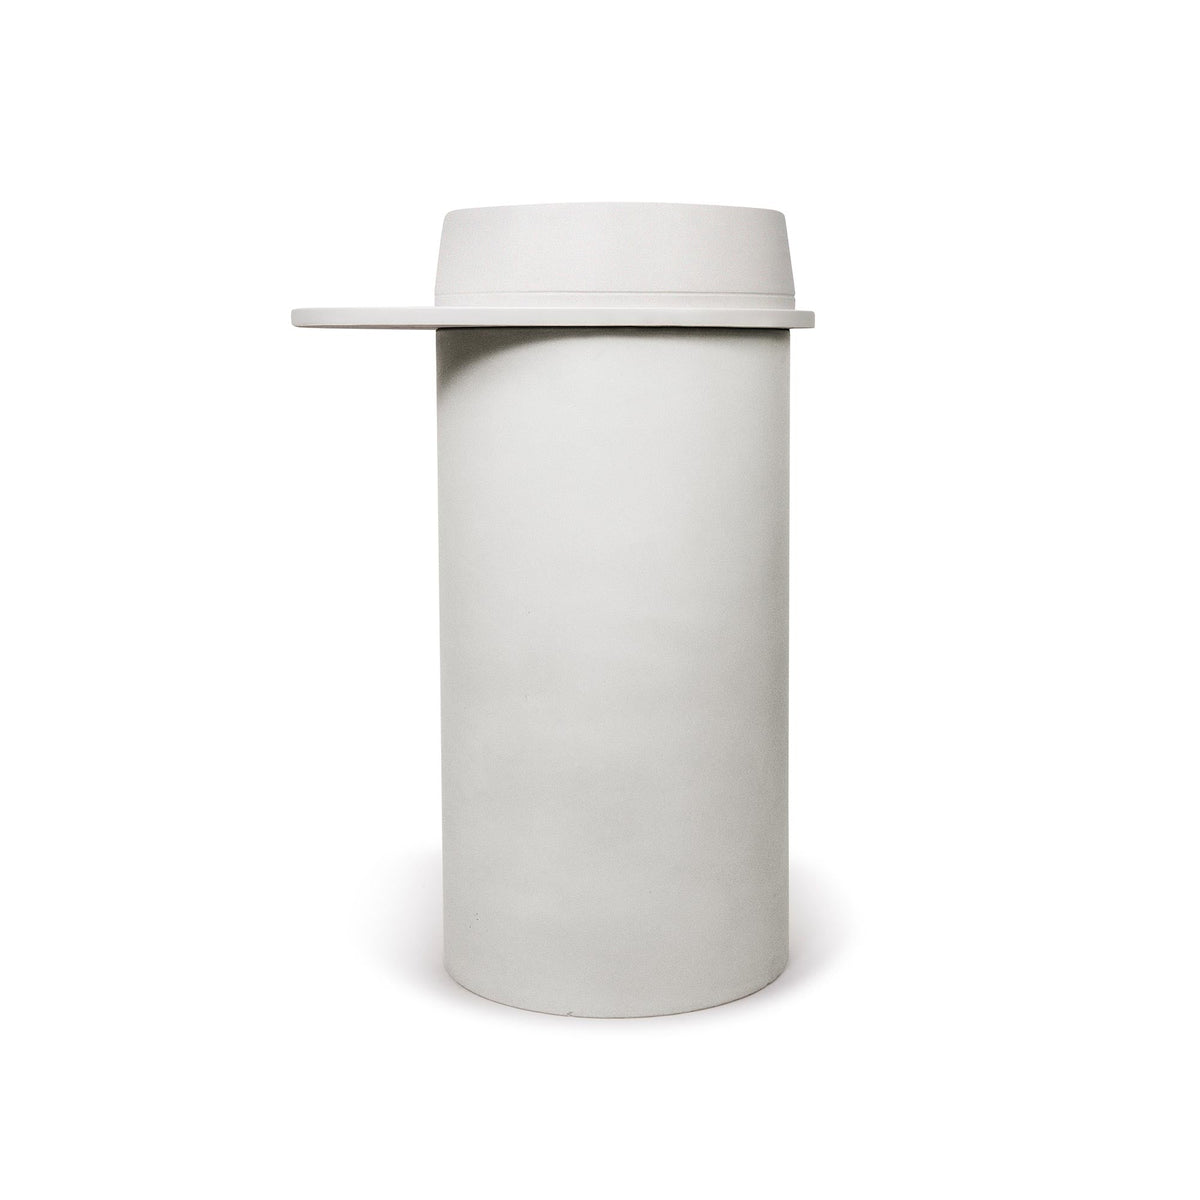 Cylinder with Tray - Funl Basin (Mid Tone Grey,Clay)